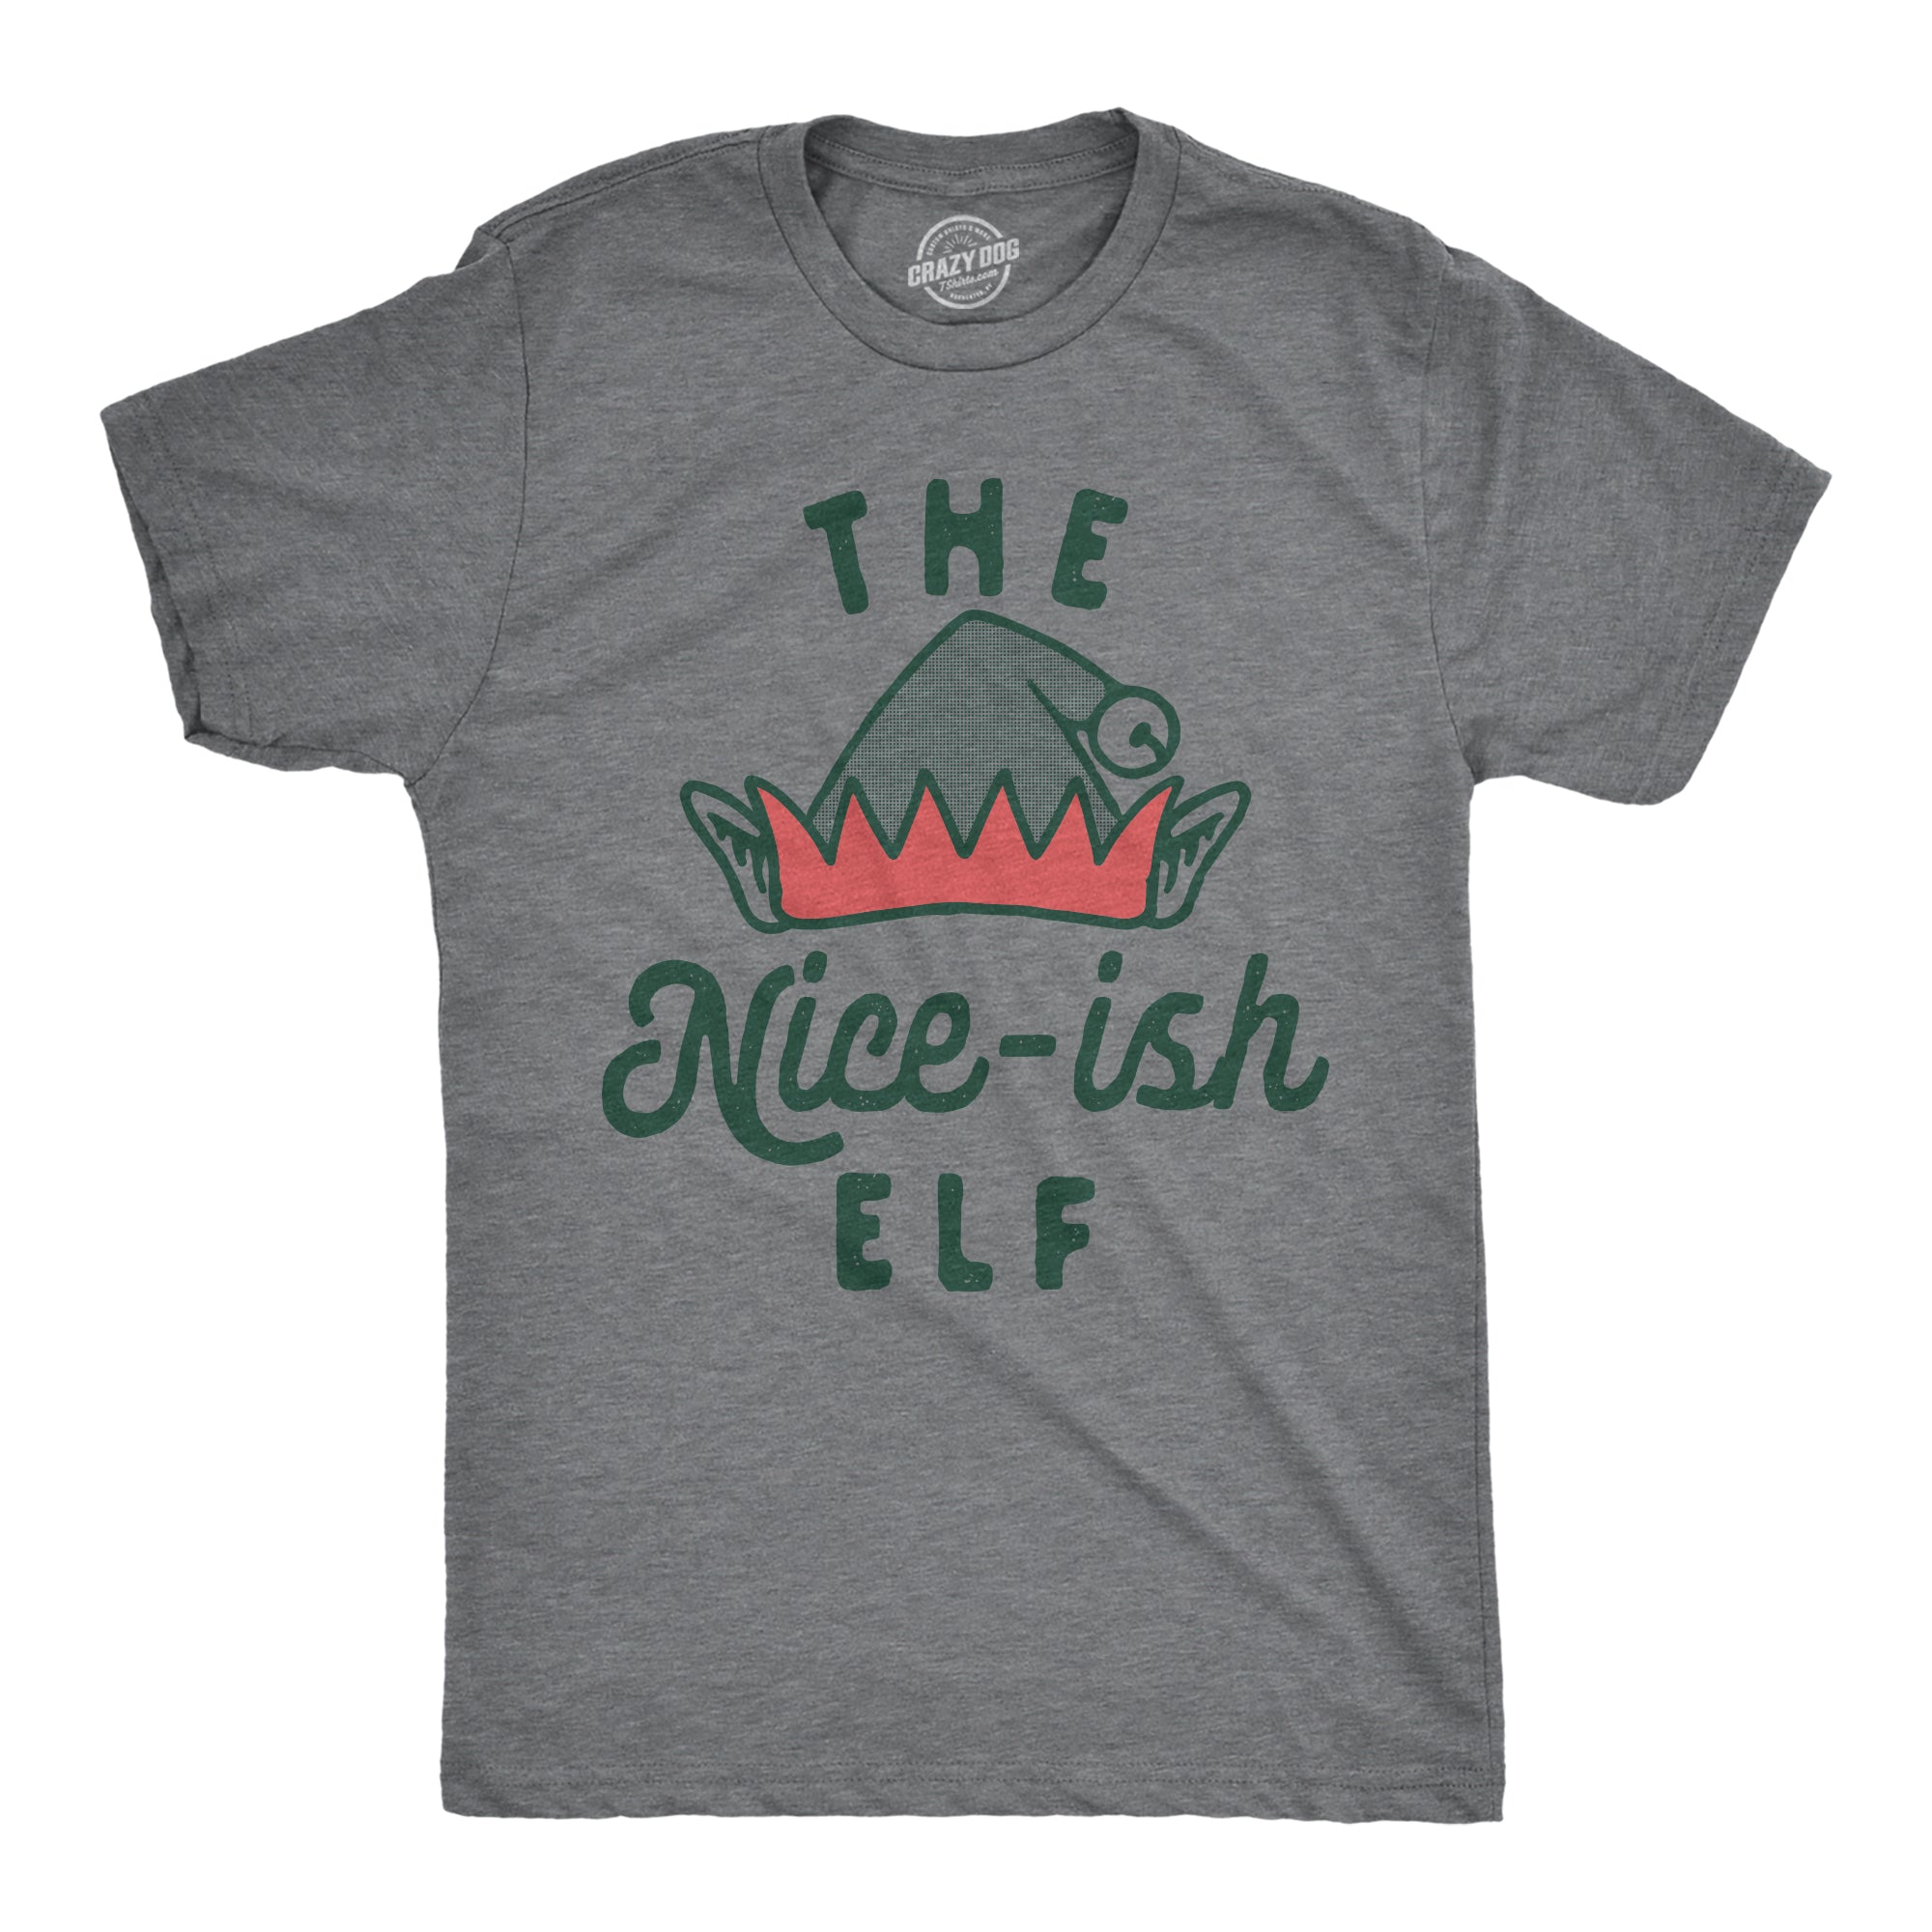 Funny Dark Heather Grey - NICEISH The Nice Ish Elf Mens T Shirt Nerdy Christmas sarcastic Tee